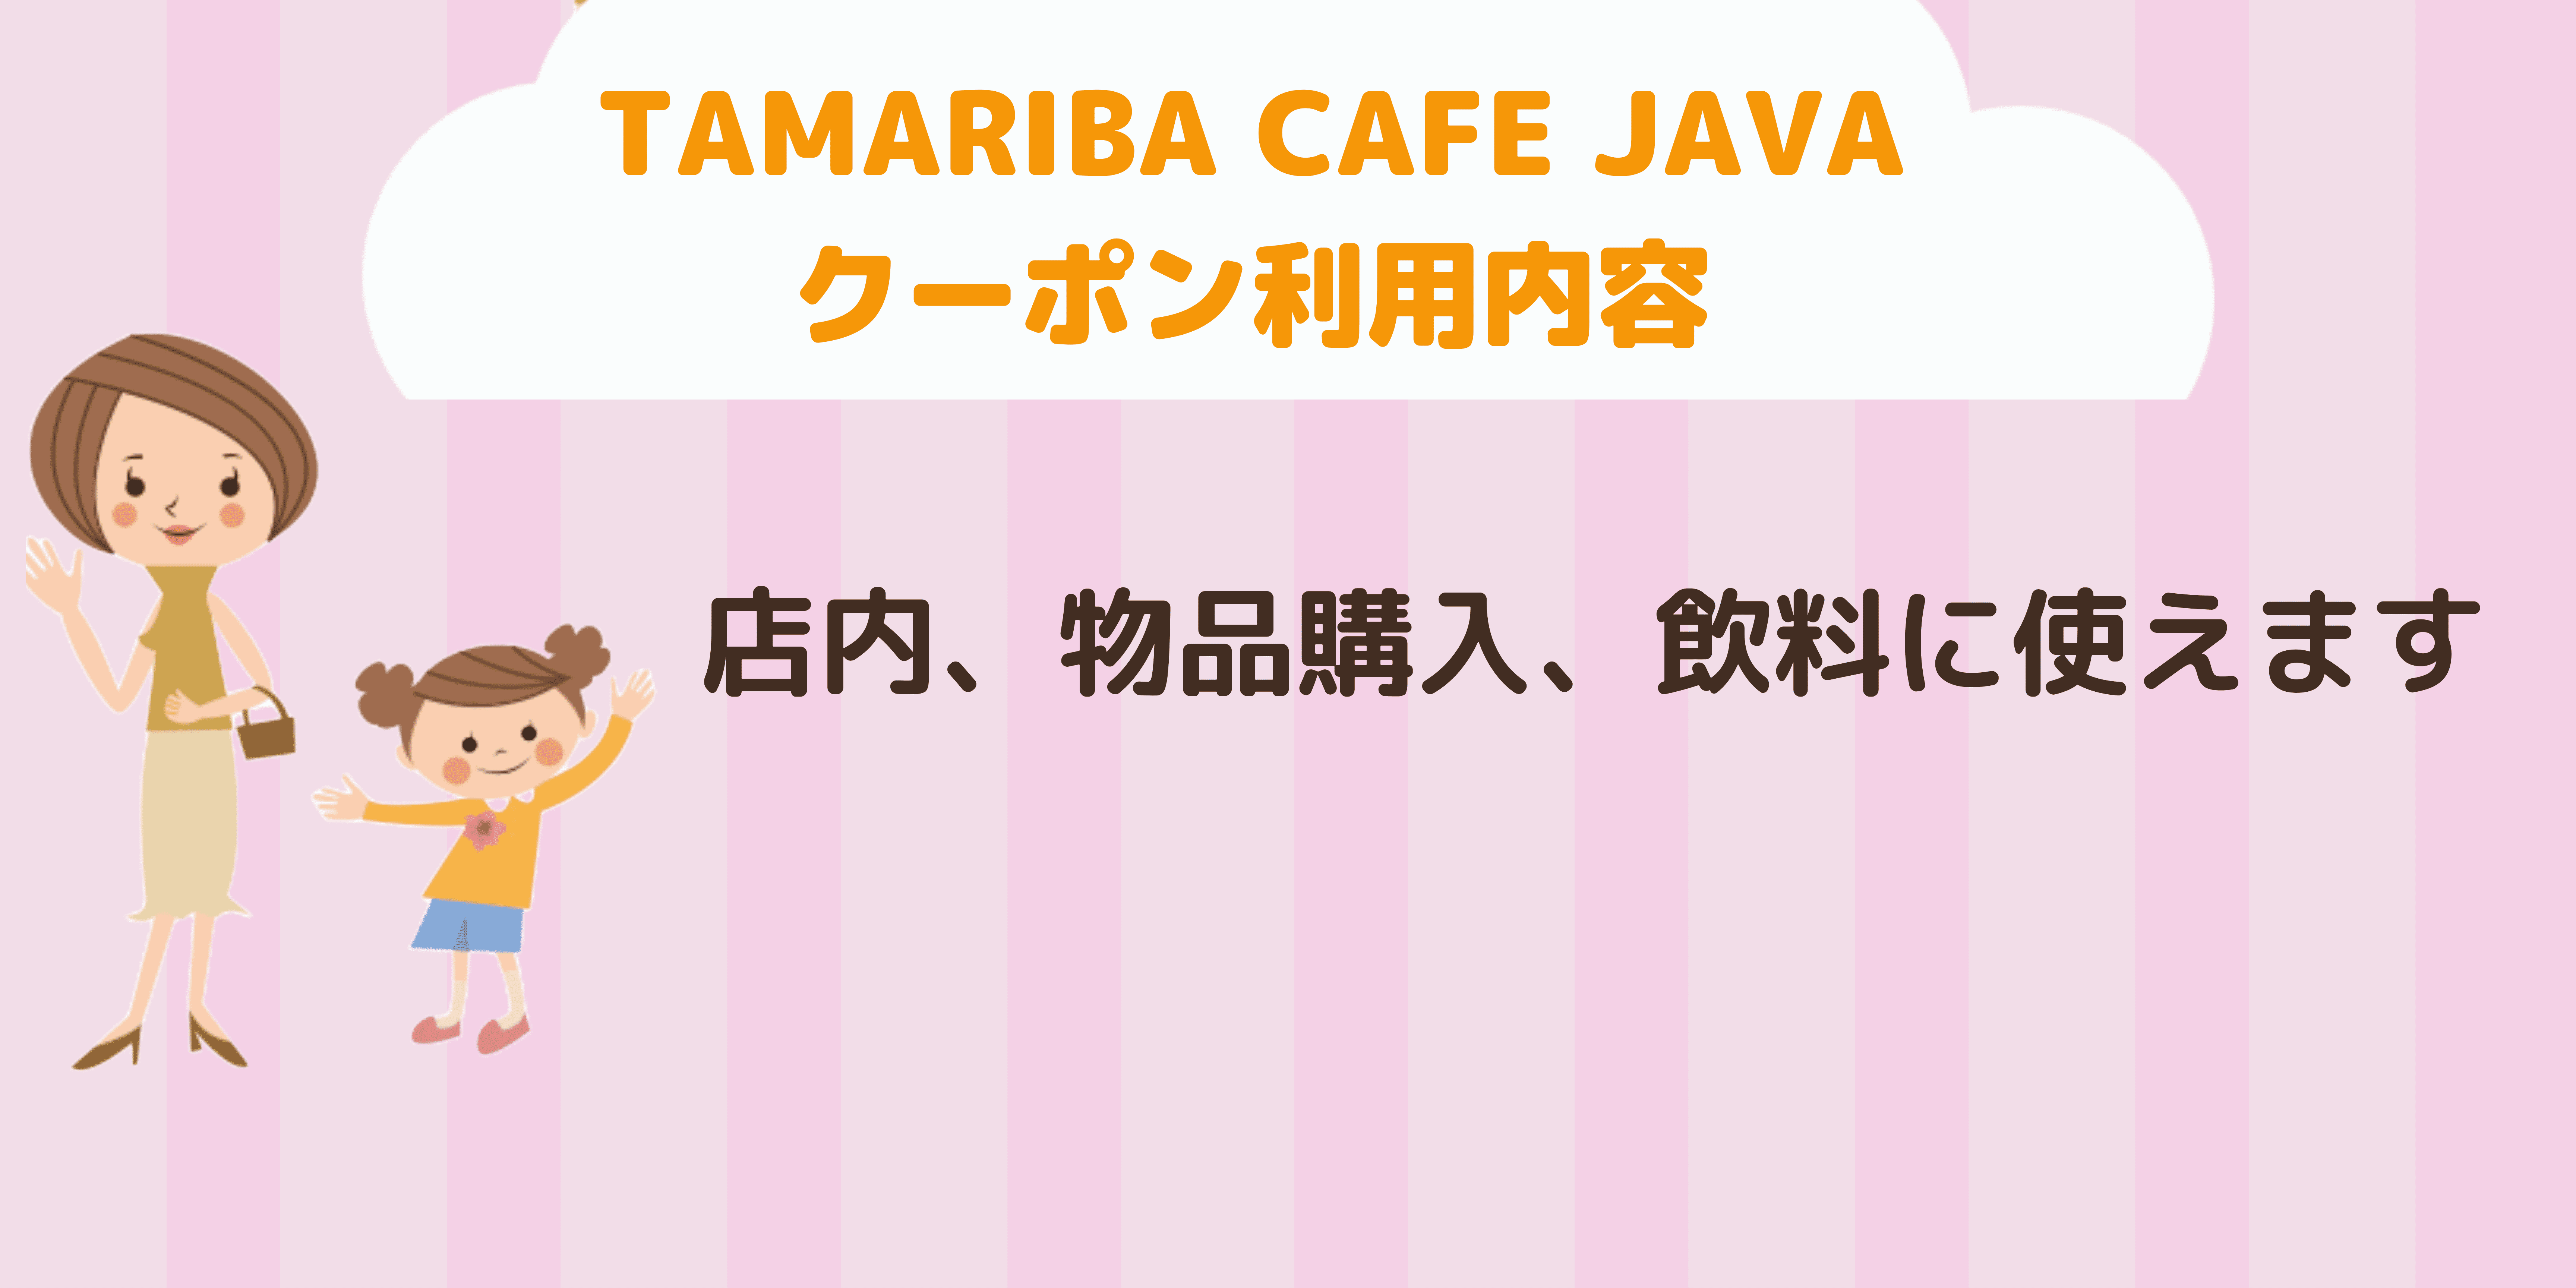 TAMARIBA CAFE JAVA